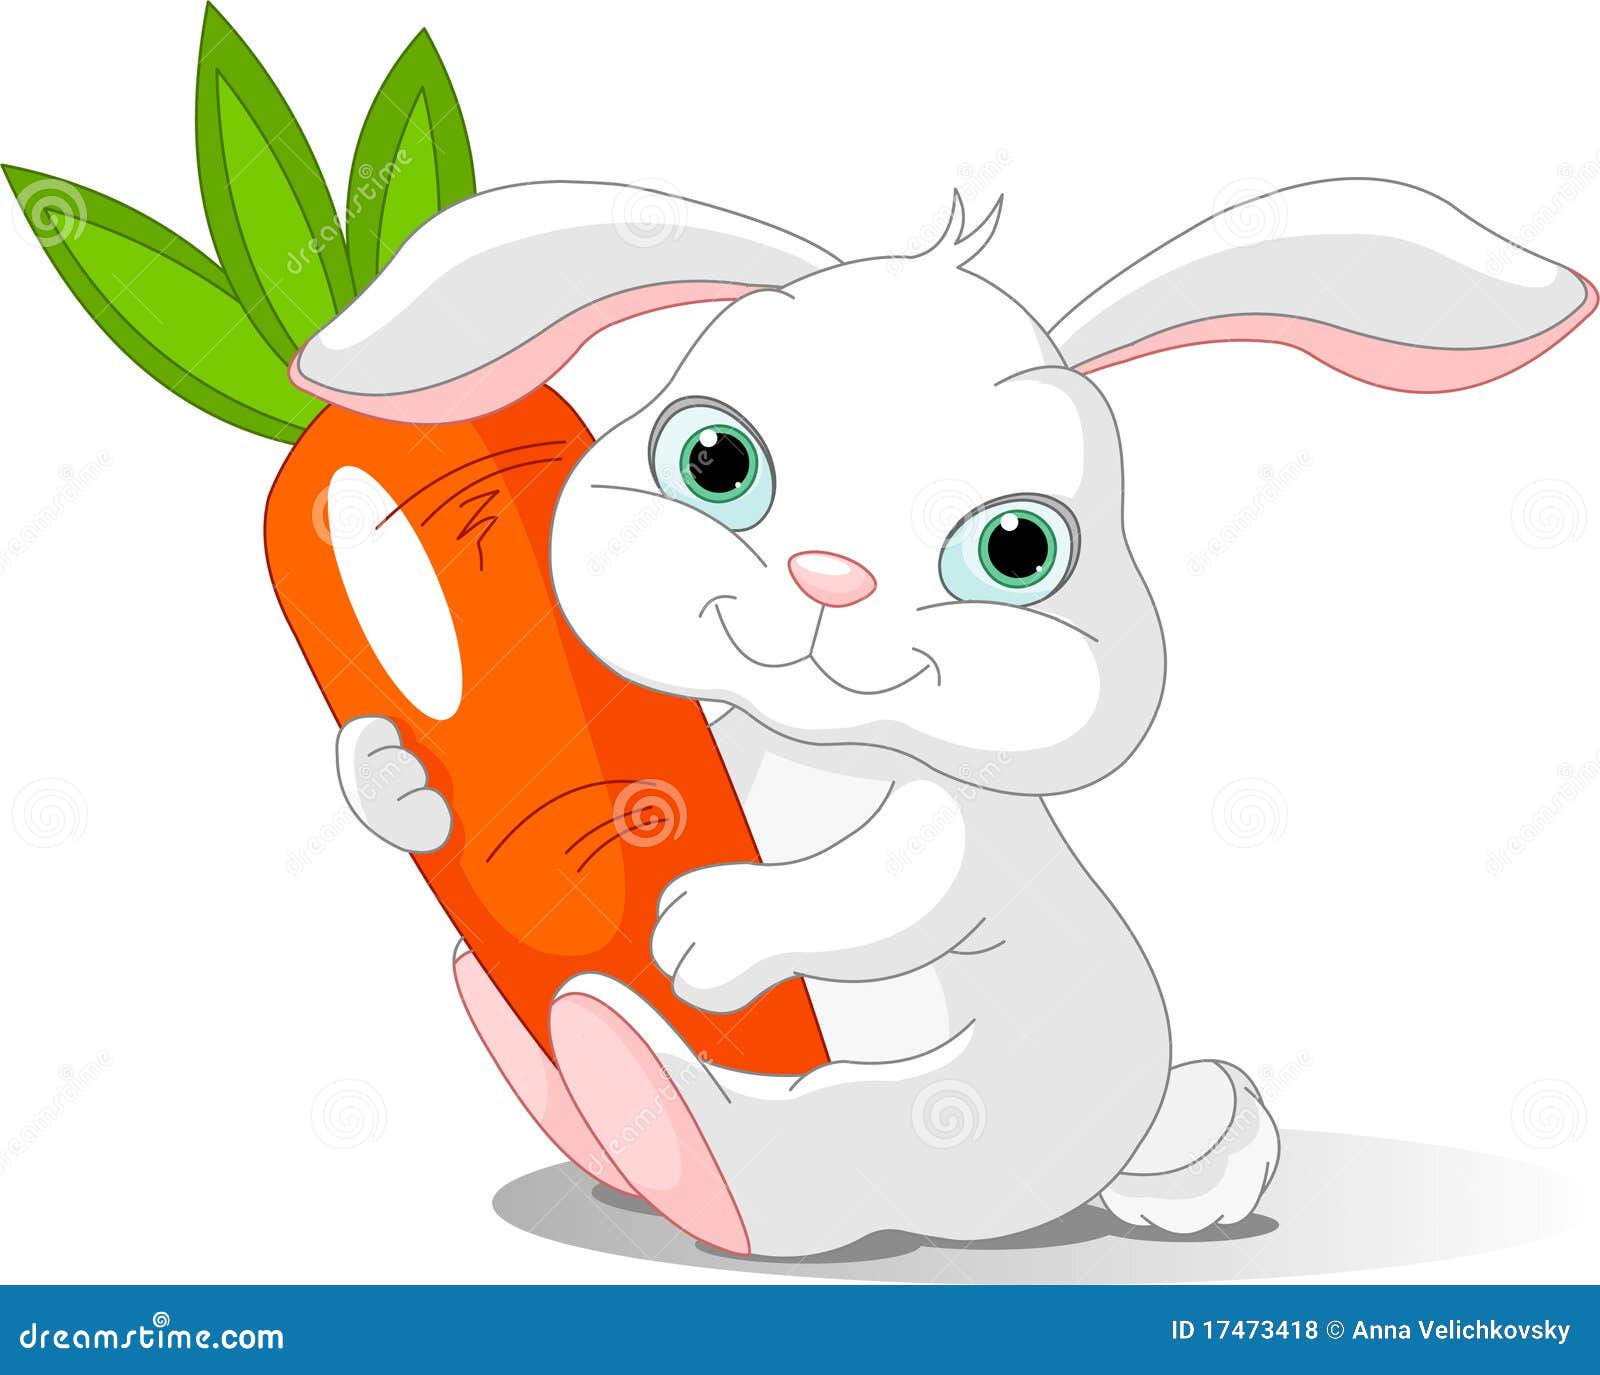 Включи хрум зайцы. Заяц с морковкой. Зайка с морковкой. Заяц мультяшный. Мультяшный заяц на прозрачном фоне.